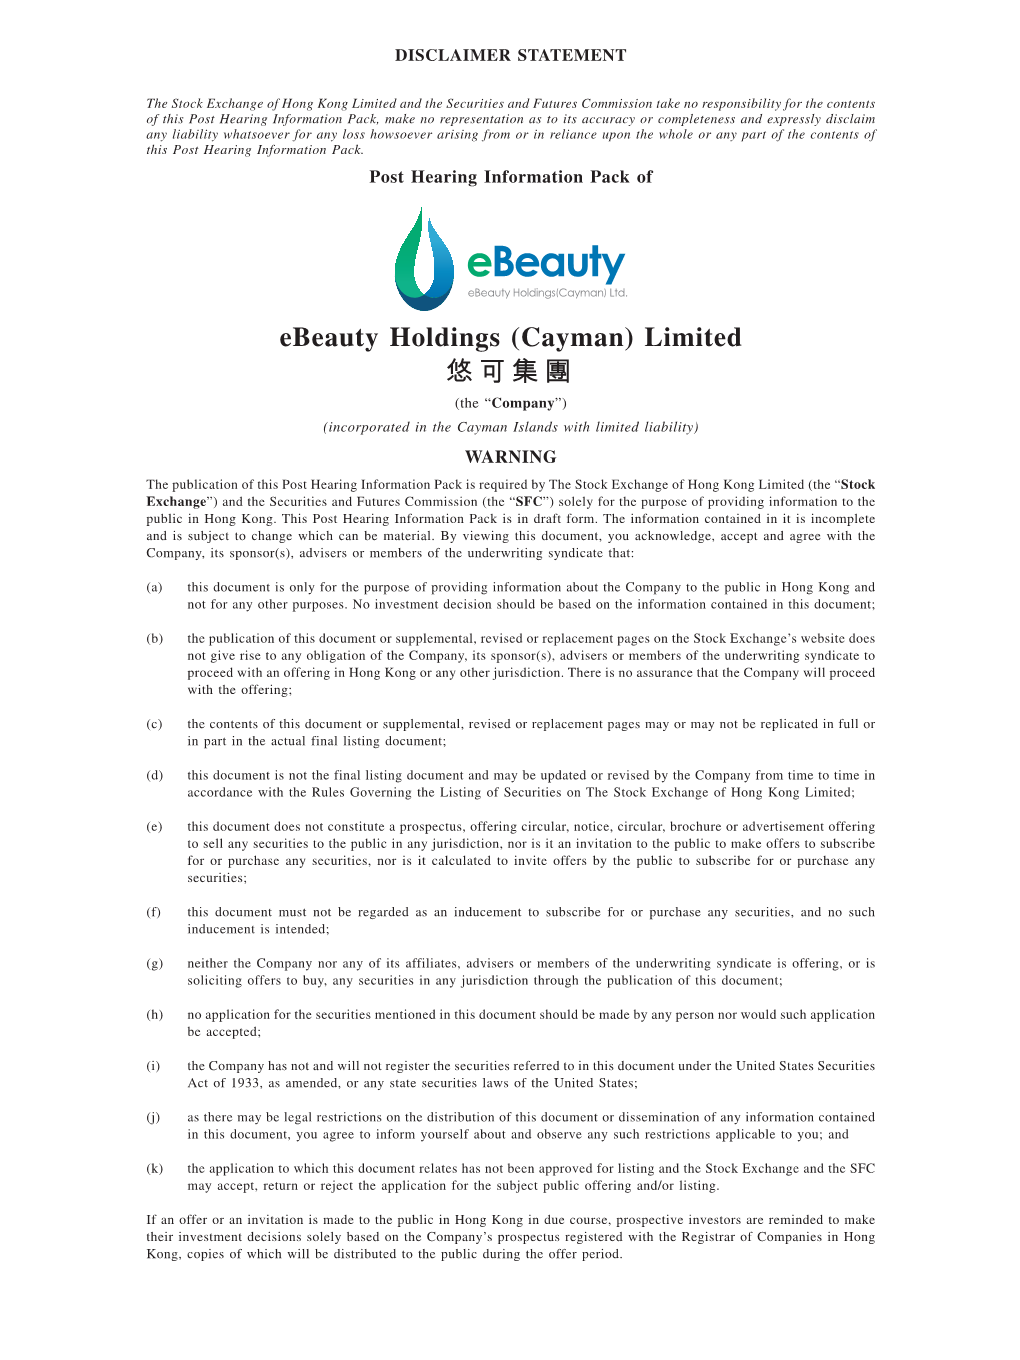 Ebeauty Holdings (Cayman) Limited 悠可集團